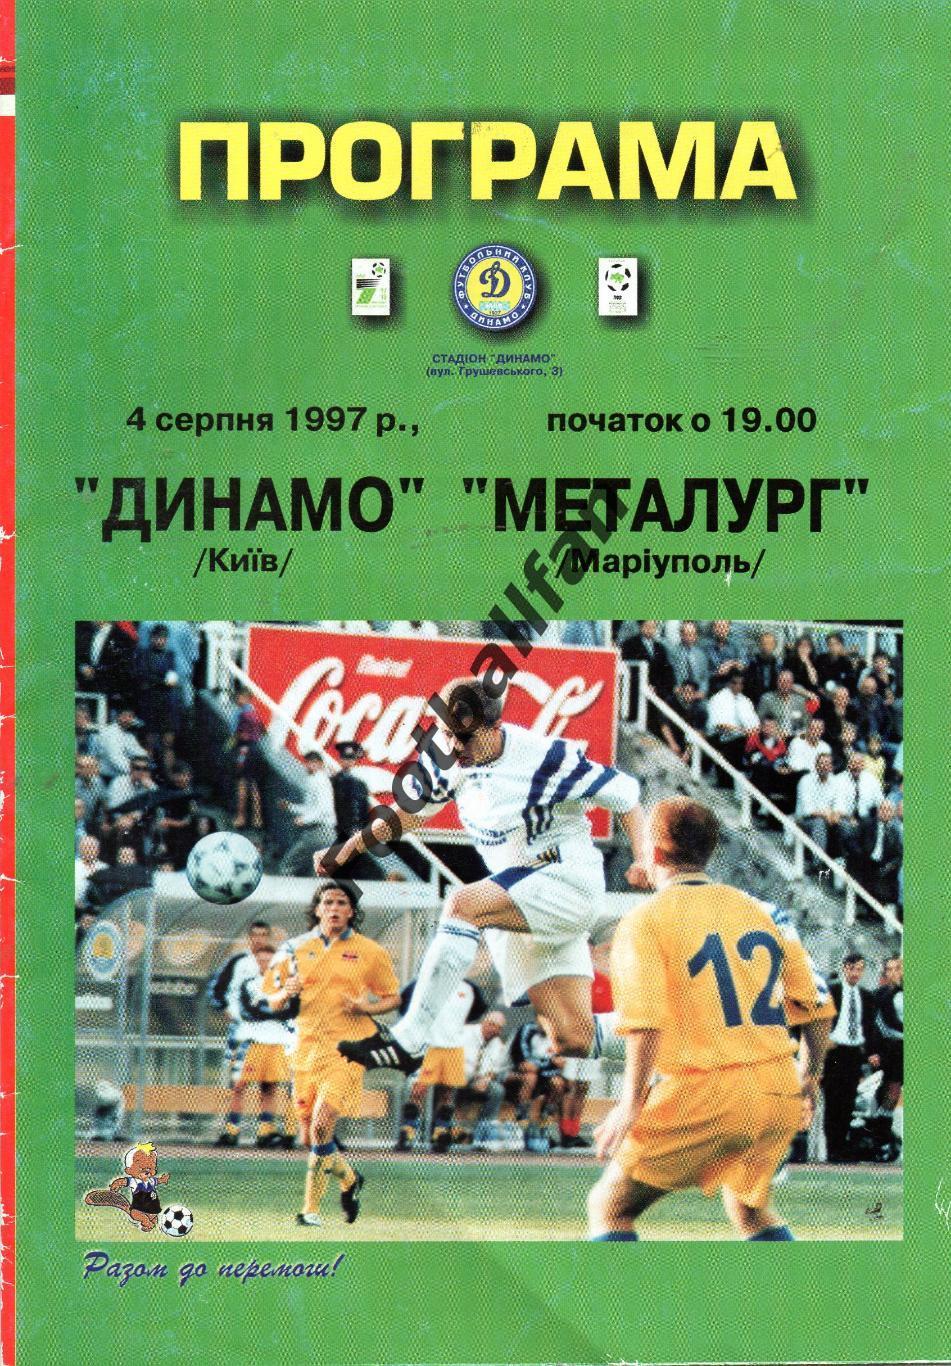 Динамо Киев - Металлург Мариуполь 04.08.1997